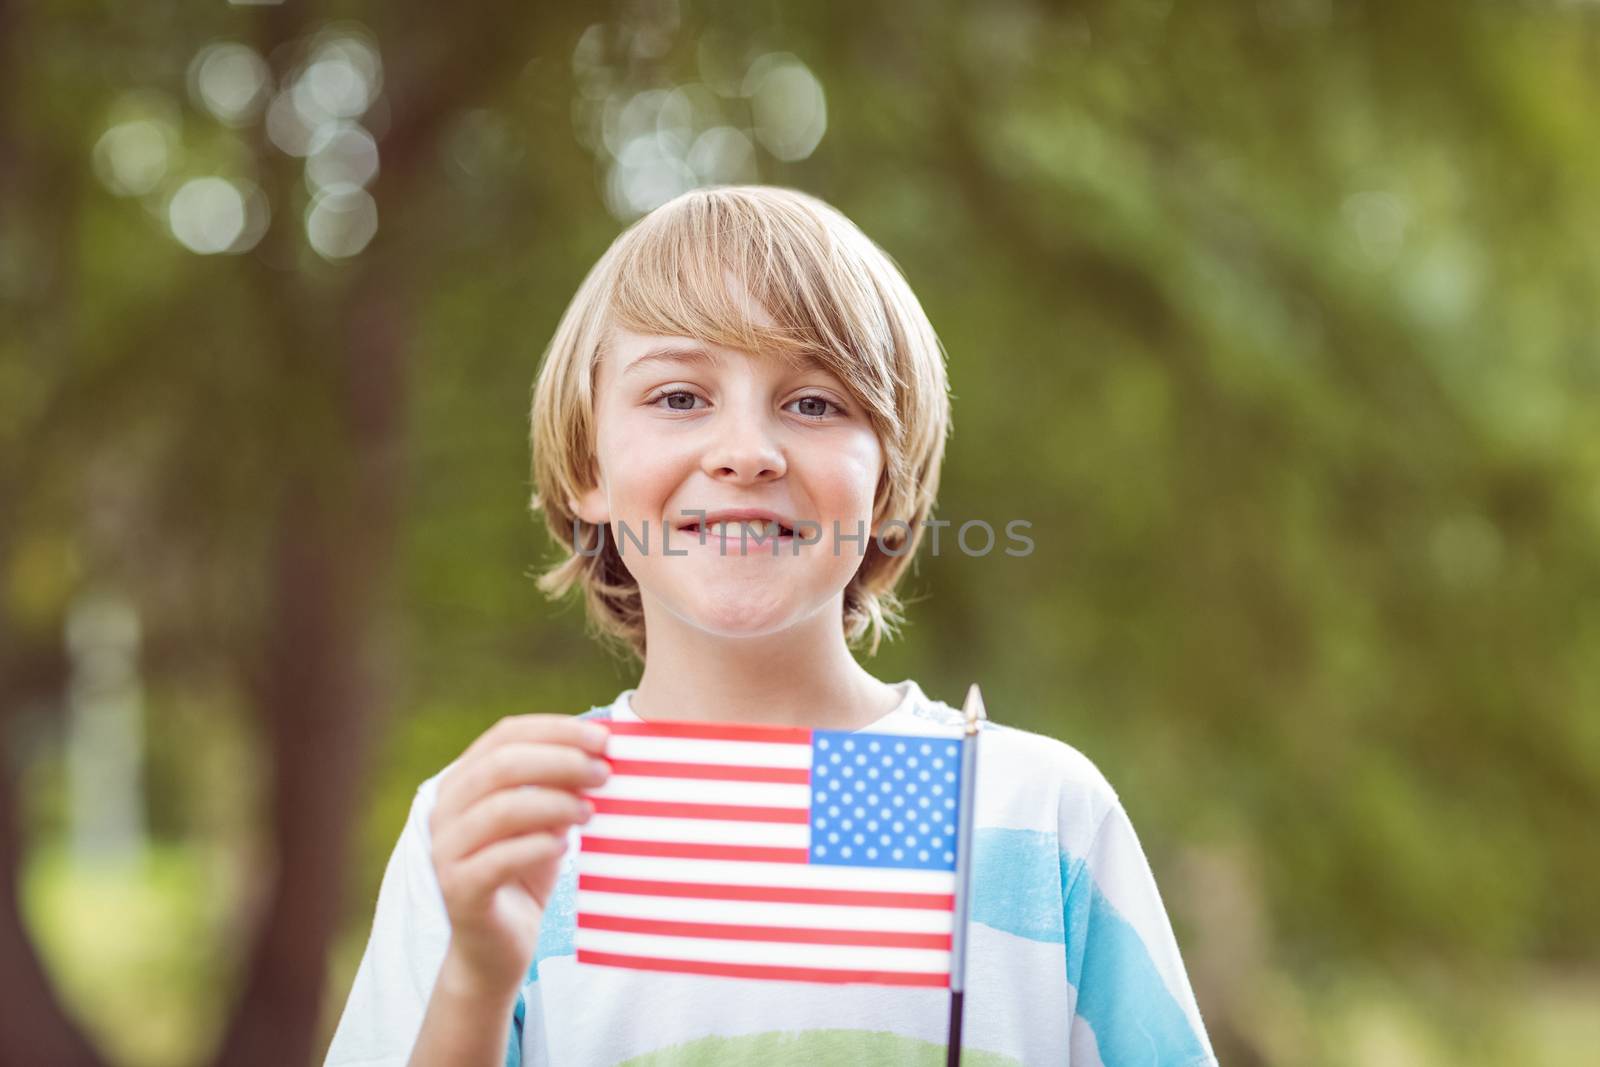 Young boy holding an american flag  by Wavebreakmedia